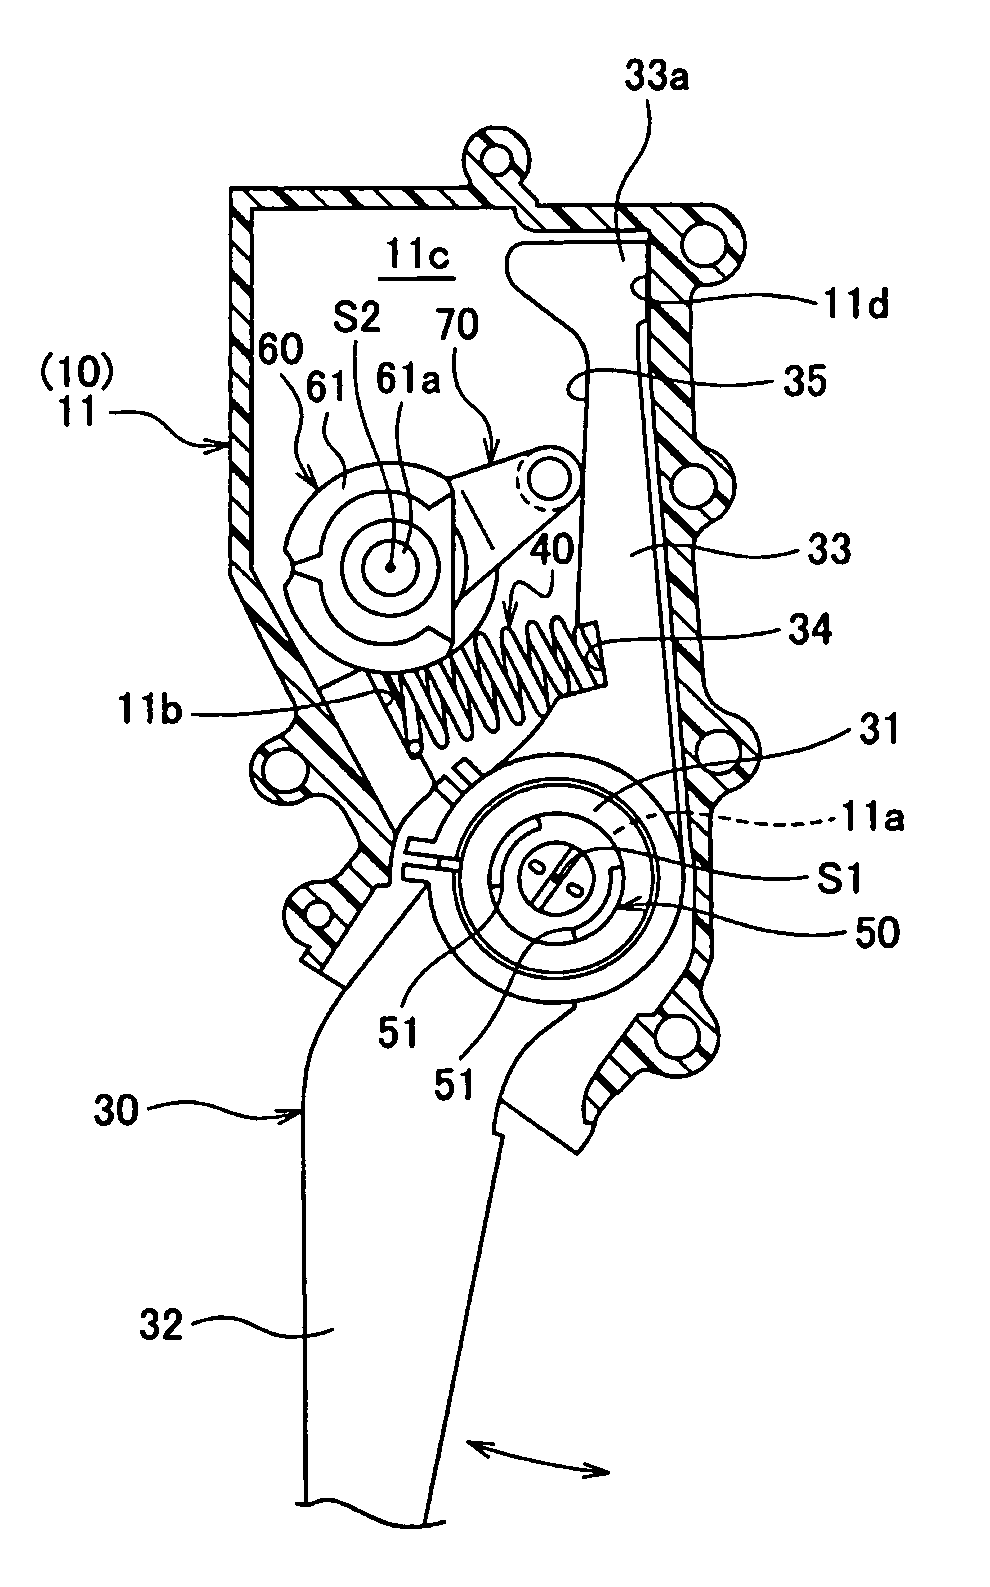 Accelerator pedal apparatus